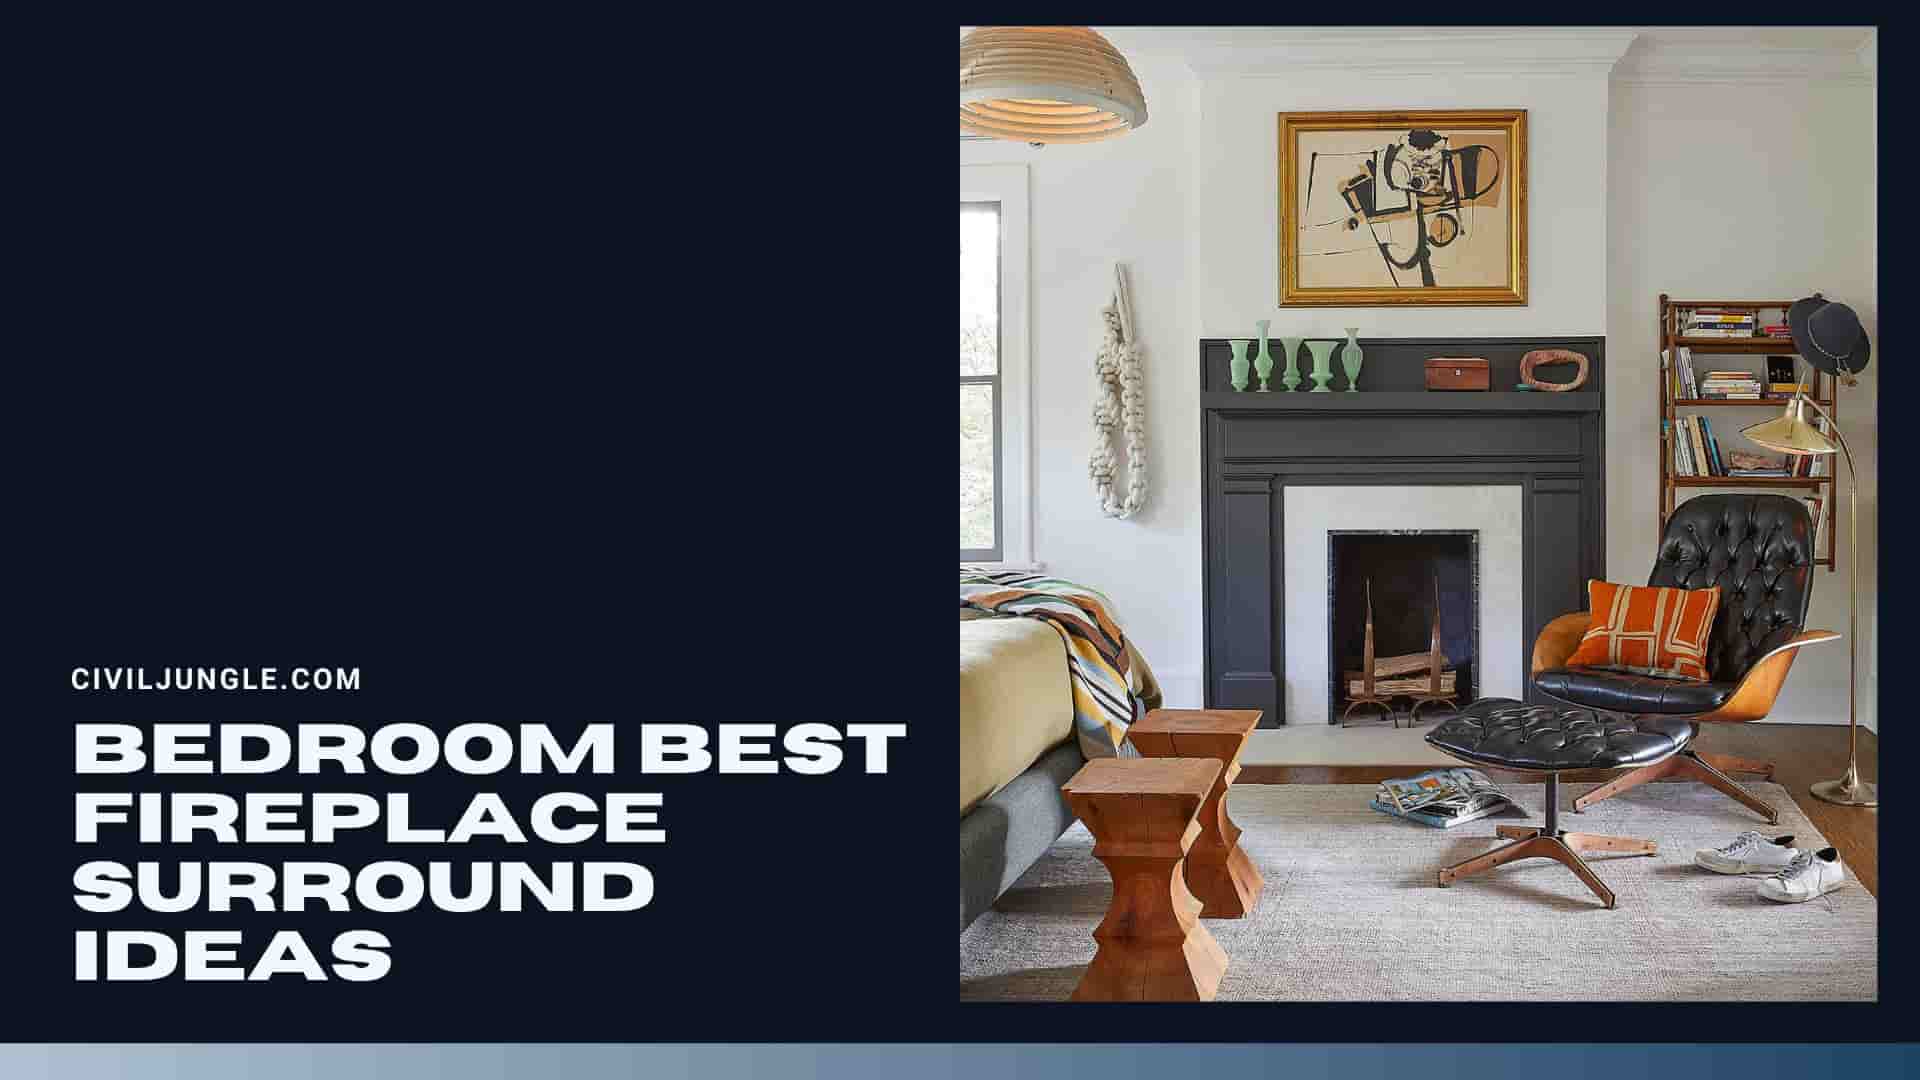 Bedroom Best Fireplace Surround Ideas